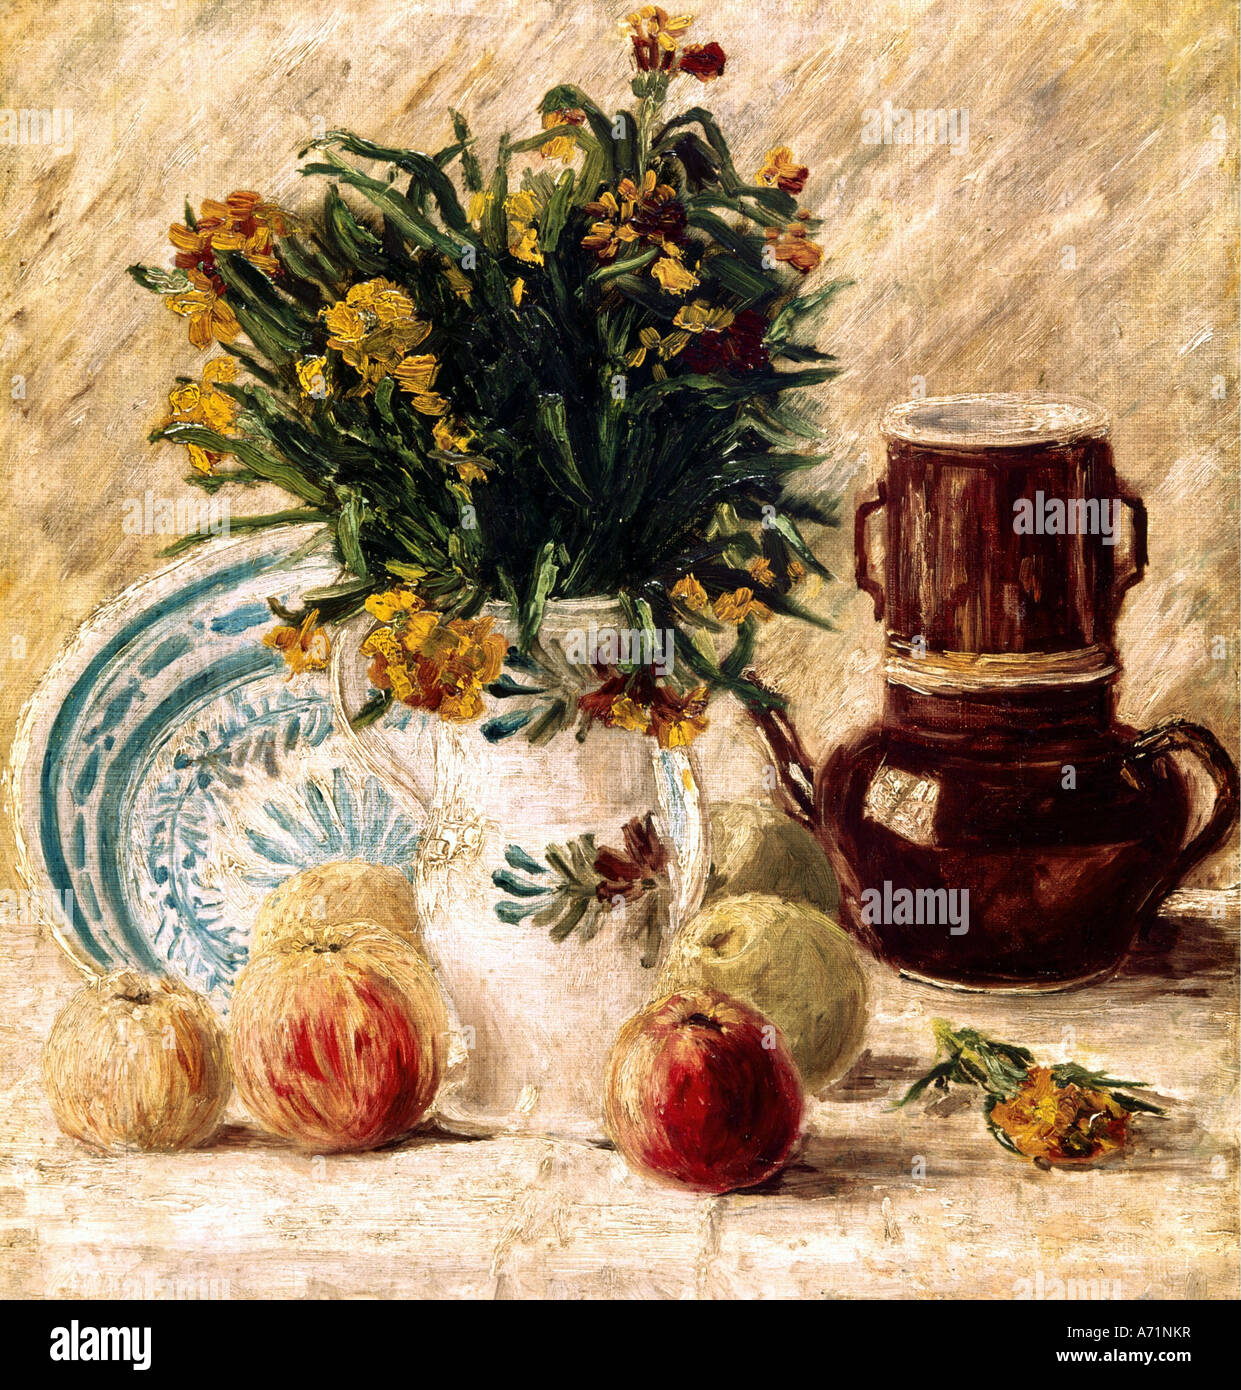 'Fine Arts, Vincent van Gogh, (1853 - 1890), peinture, 'Still life', vers 1886, von der Heydt museum, Wuppertal, historique, h Banque D'Images